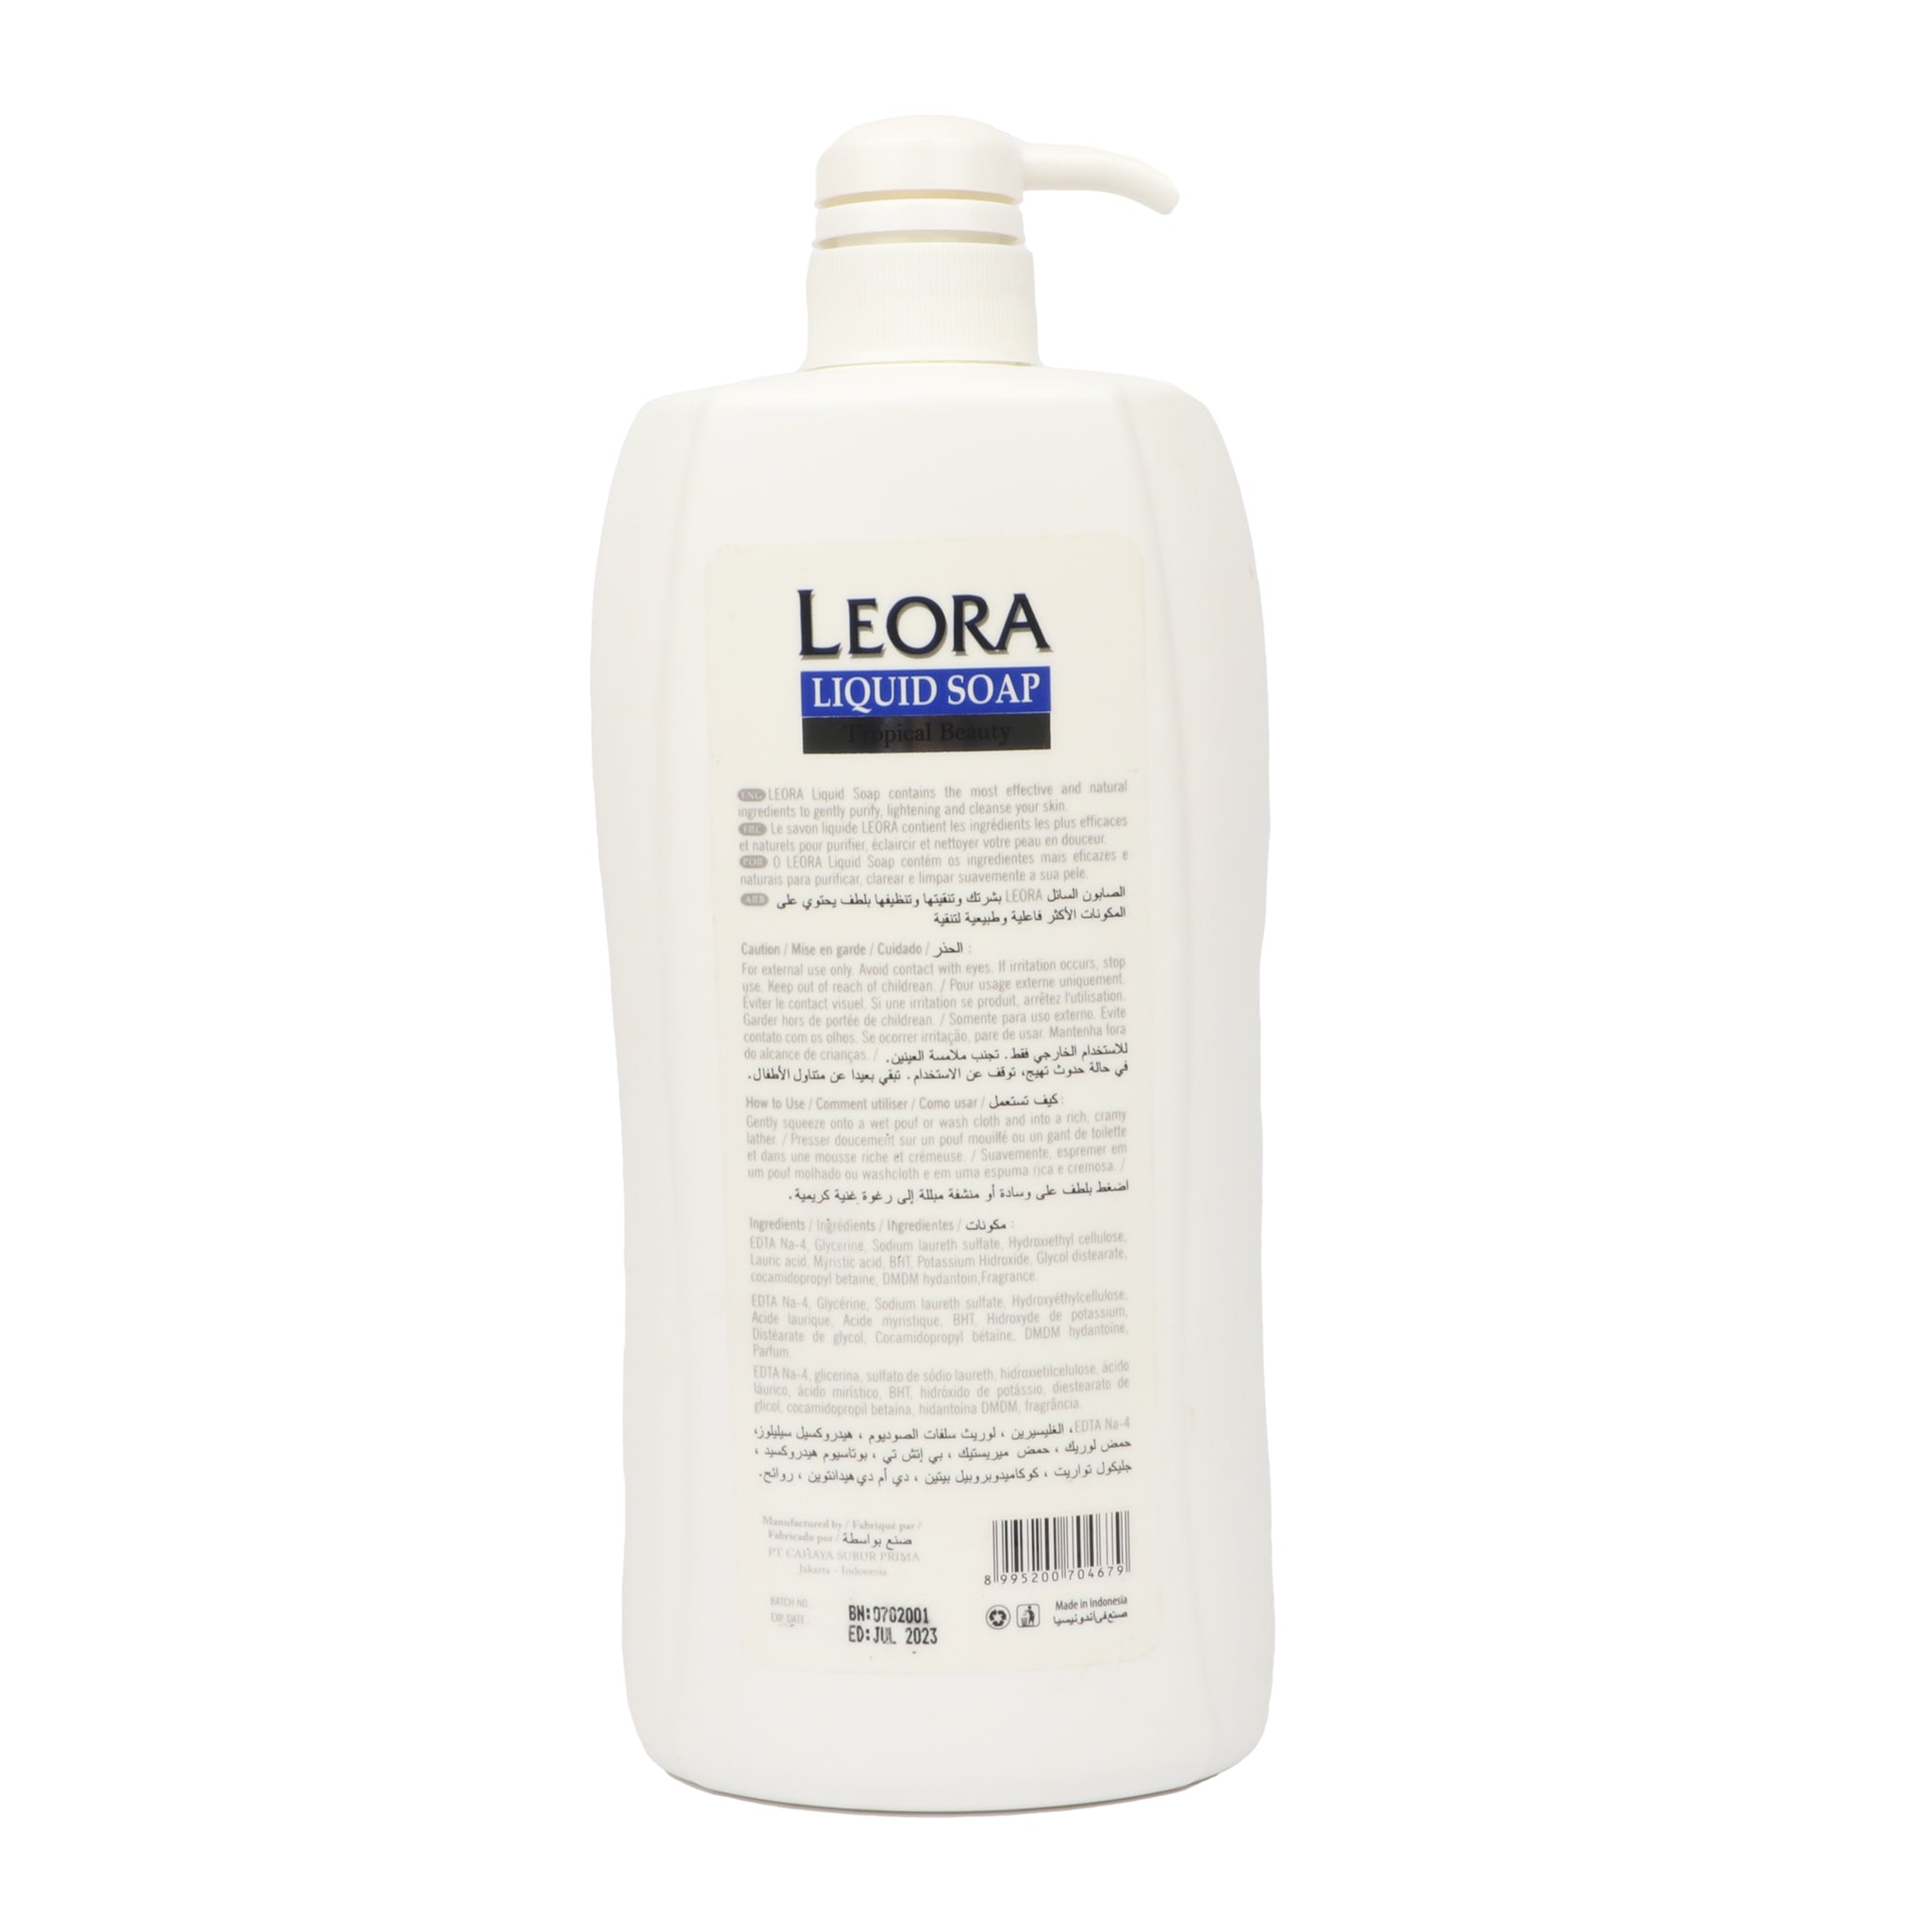 Leora Liquid Soap Tropical Beauty Skin Lightening 1000Ml